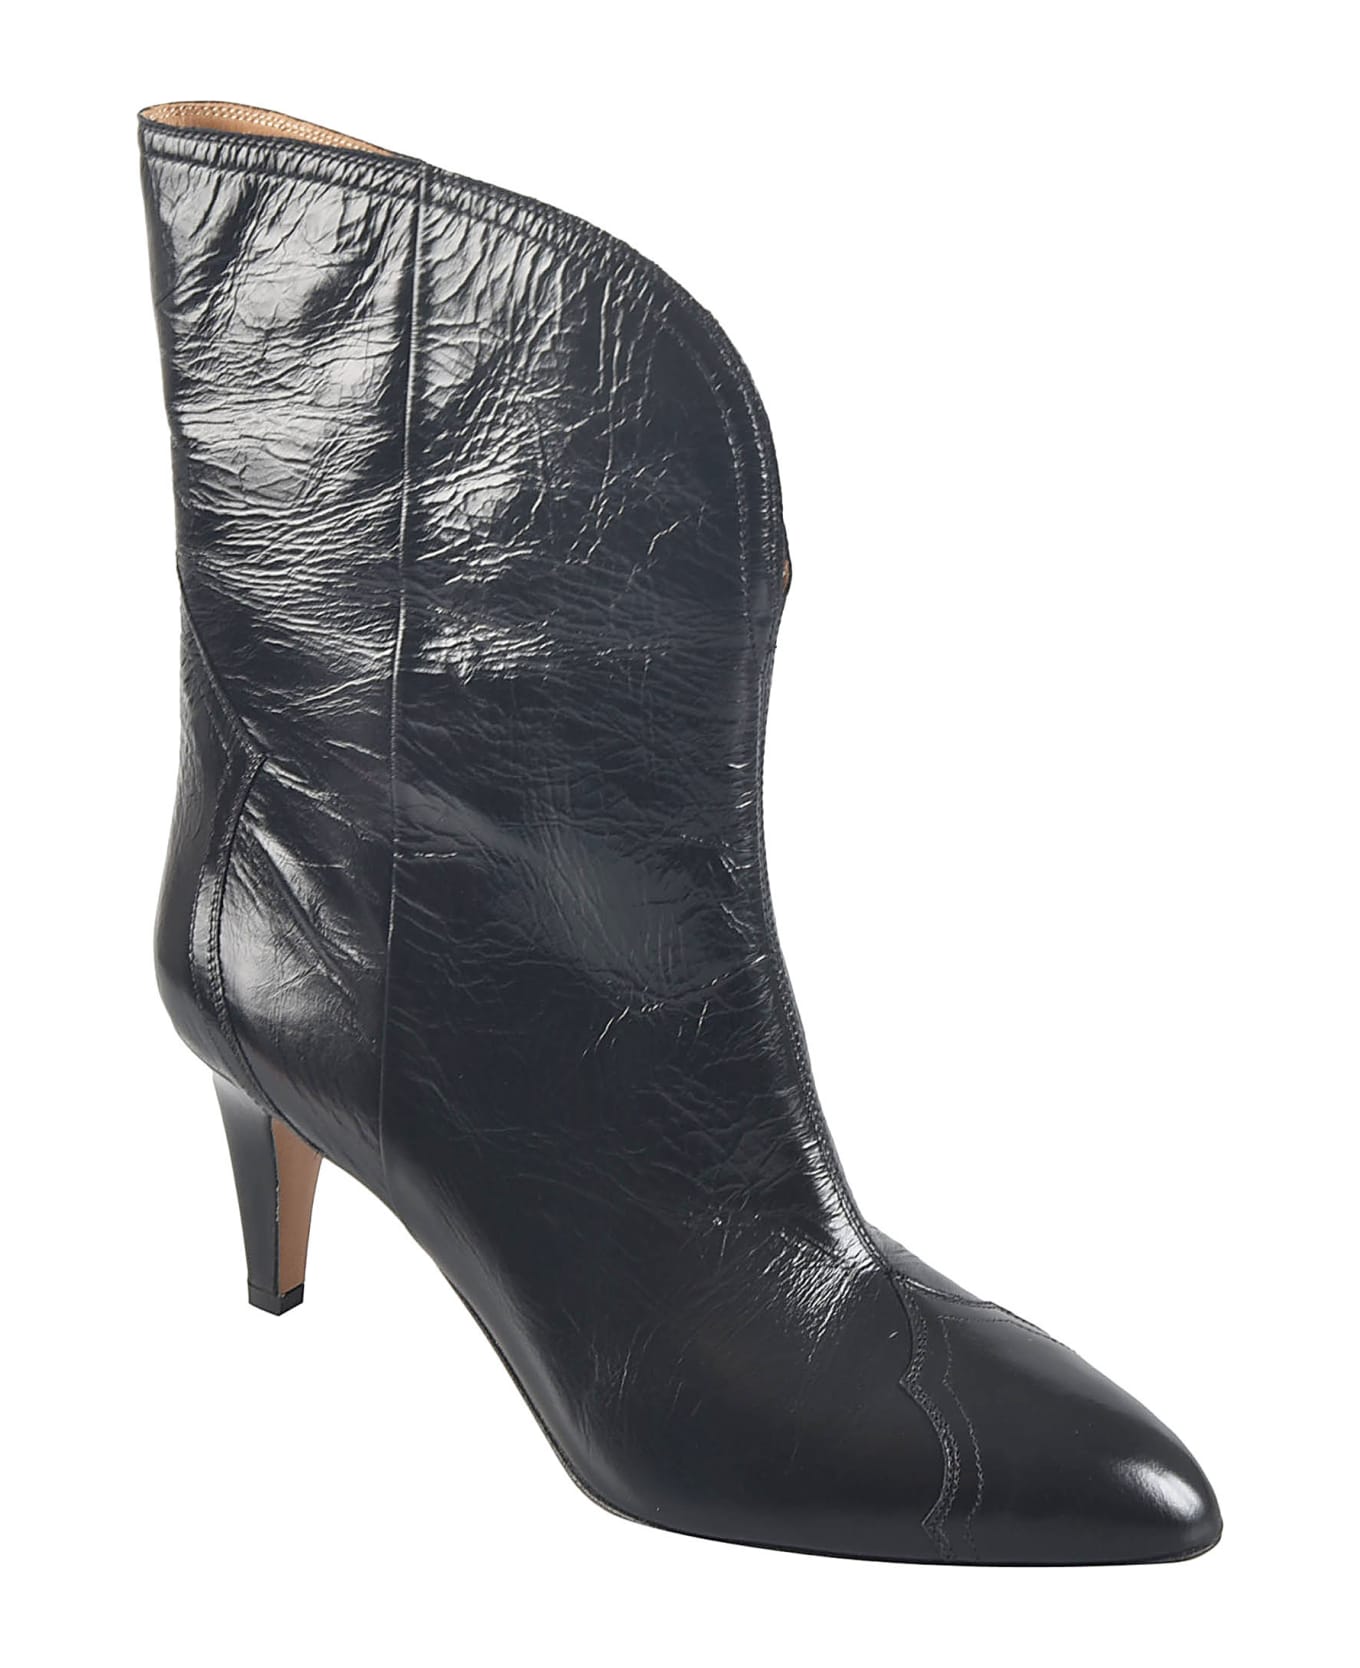 Isabel Marant Dytho High Heels Ankle Boots - Black